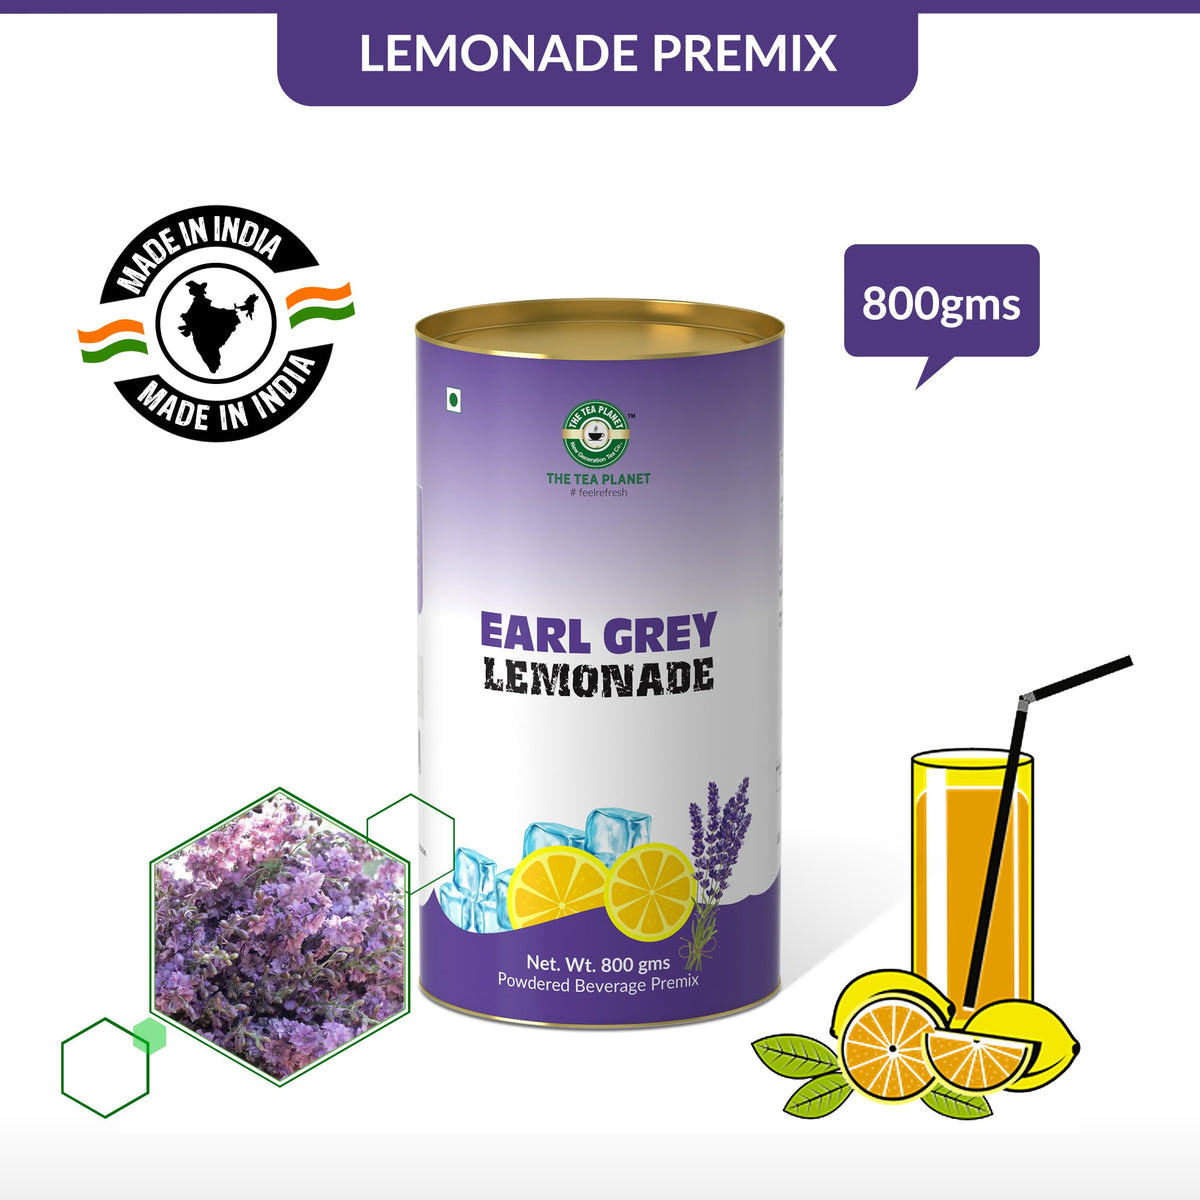 Earl Grey Lemonade Premix